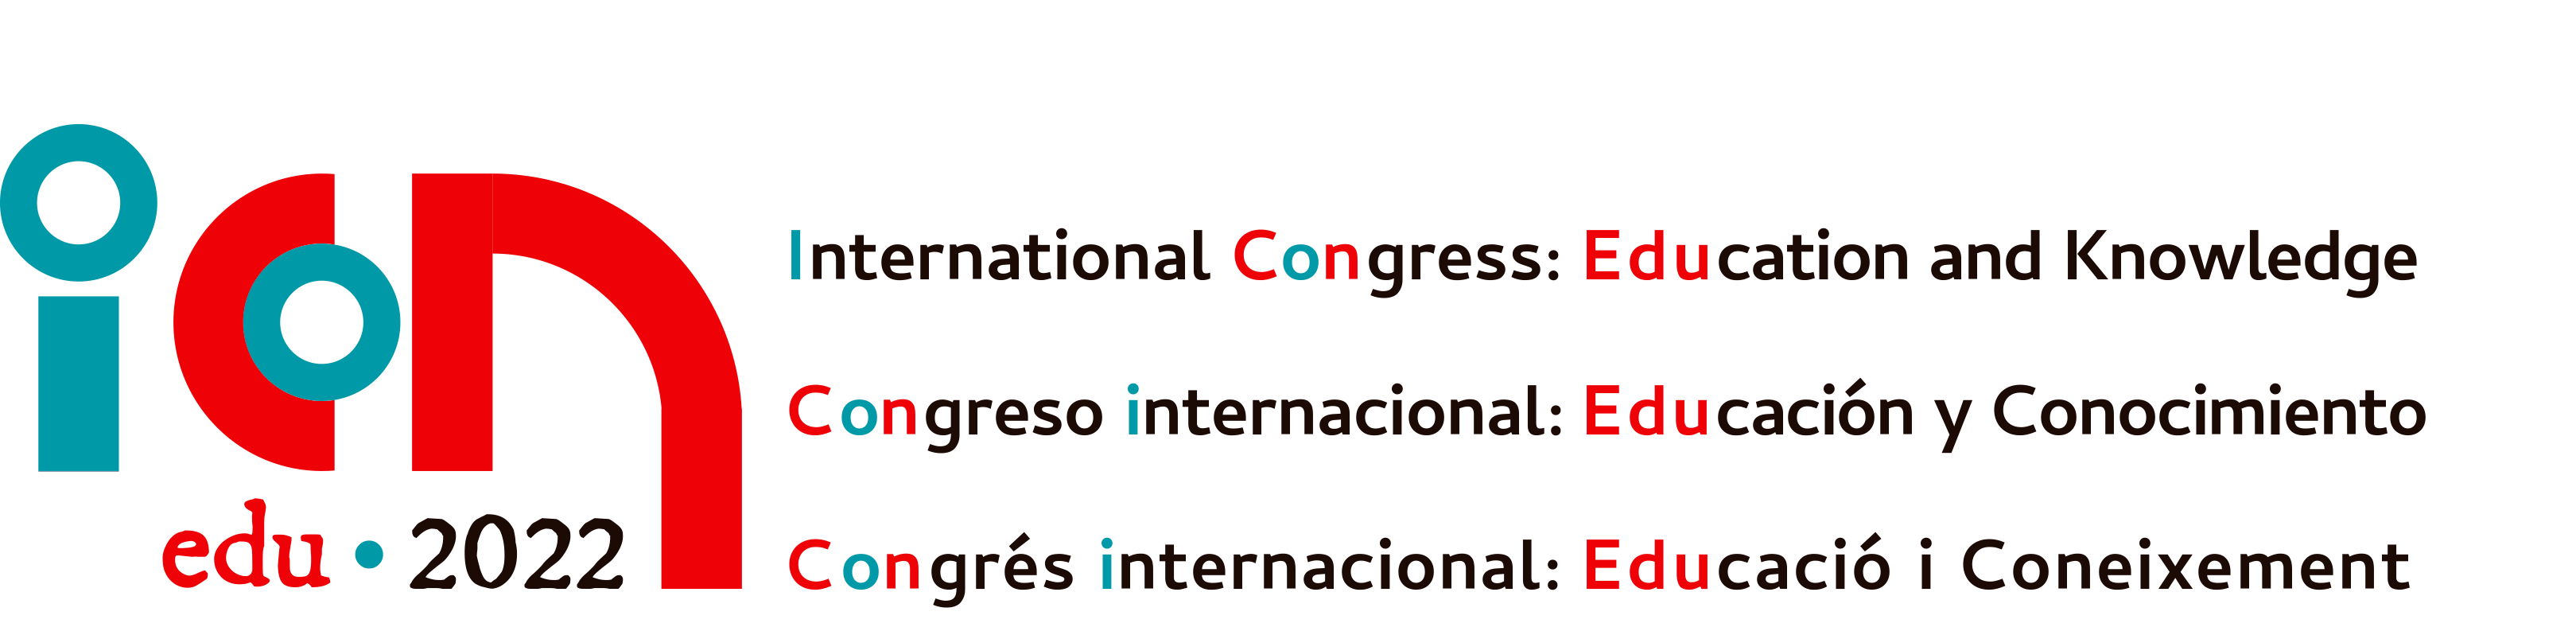 ICON-EDU 2022 - CONGRESO INTERNACIONAL